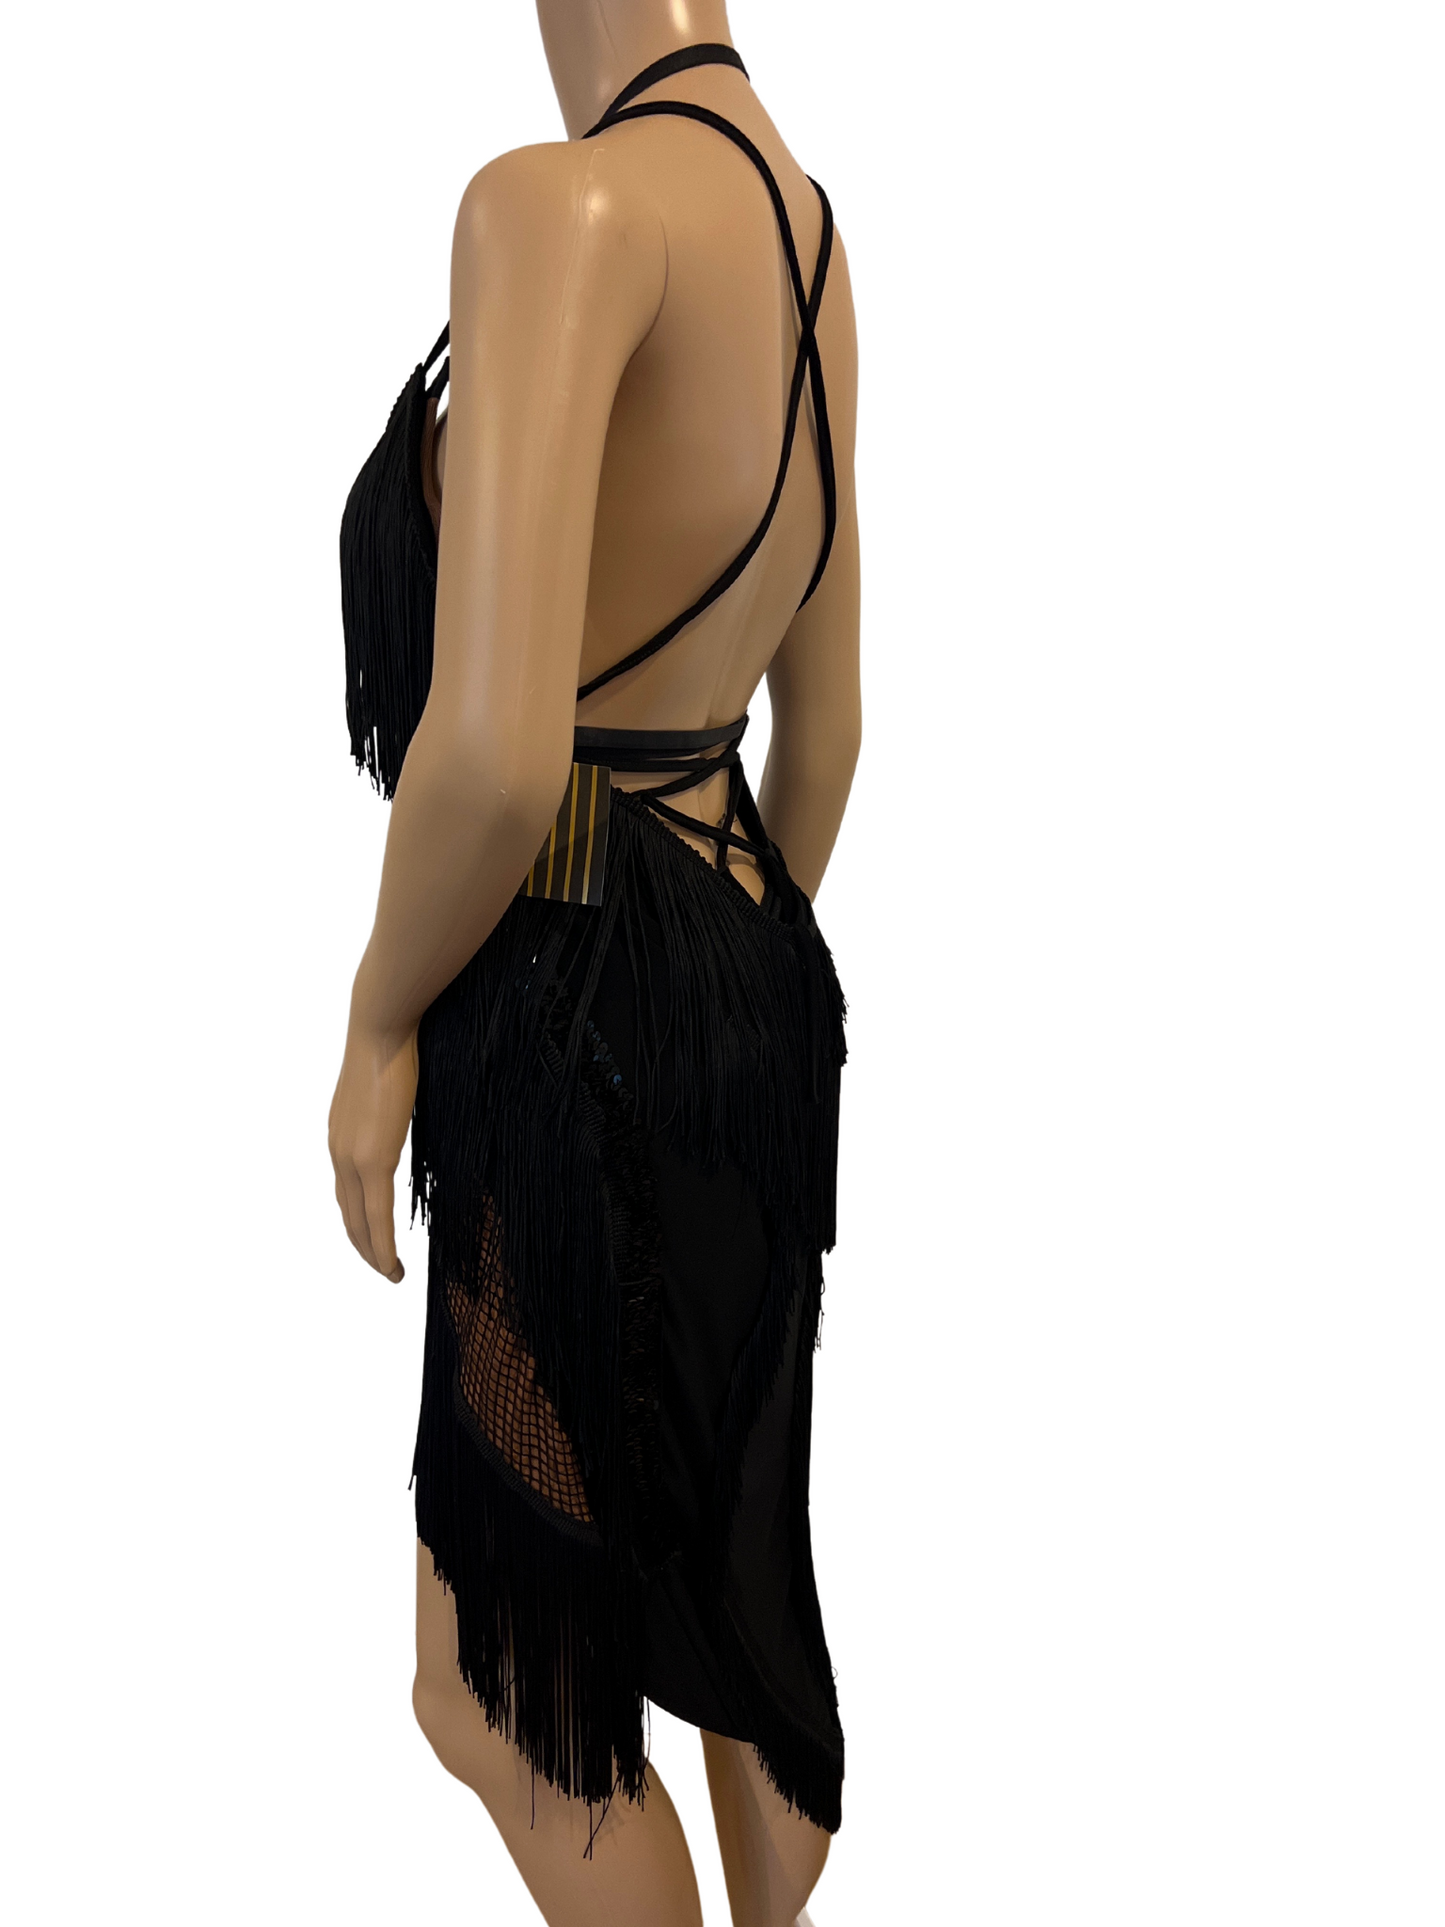 Black Dress Costume (11)